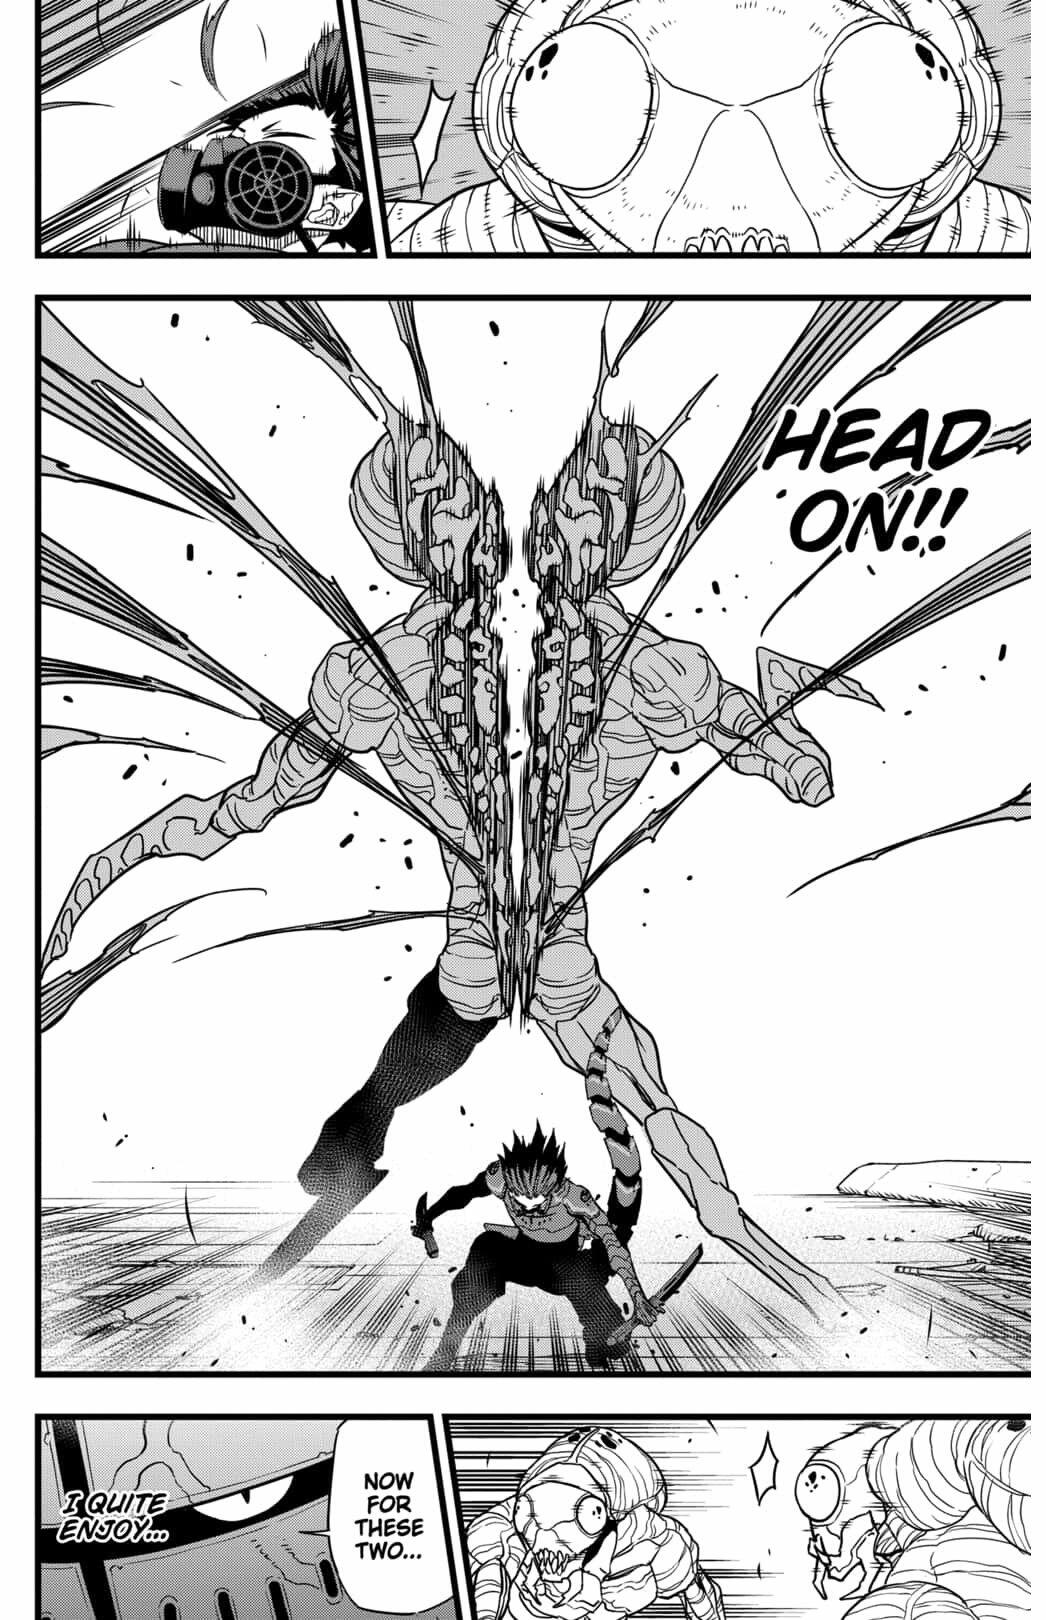 Kaiju No. 8 Chapter 74 page 2 - Mangakakalot